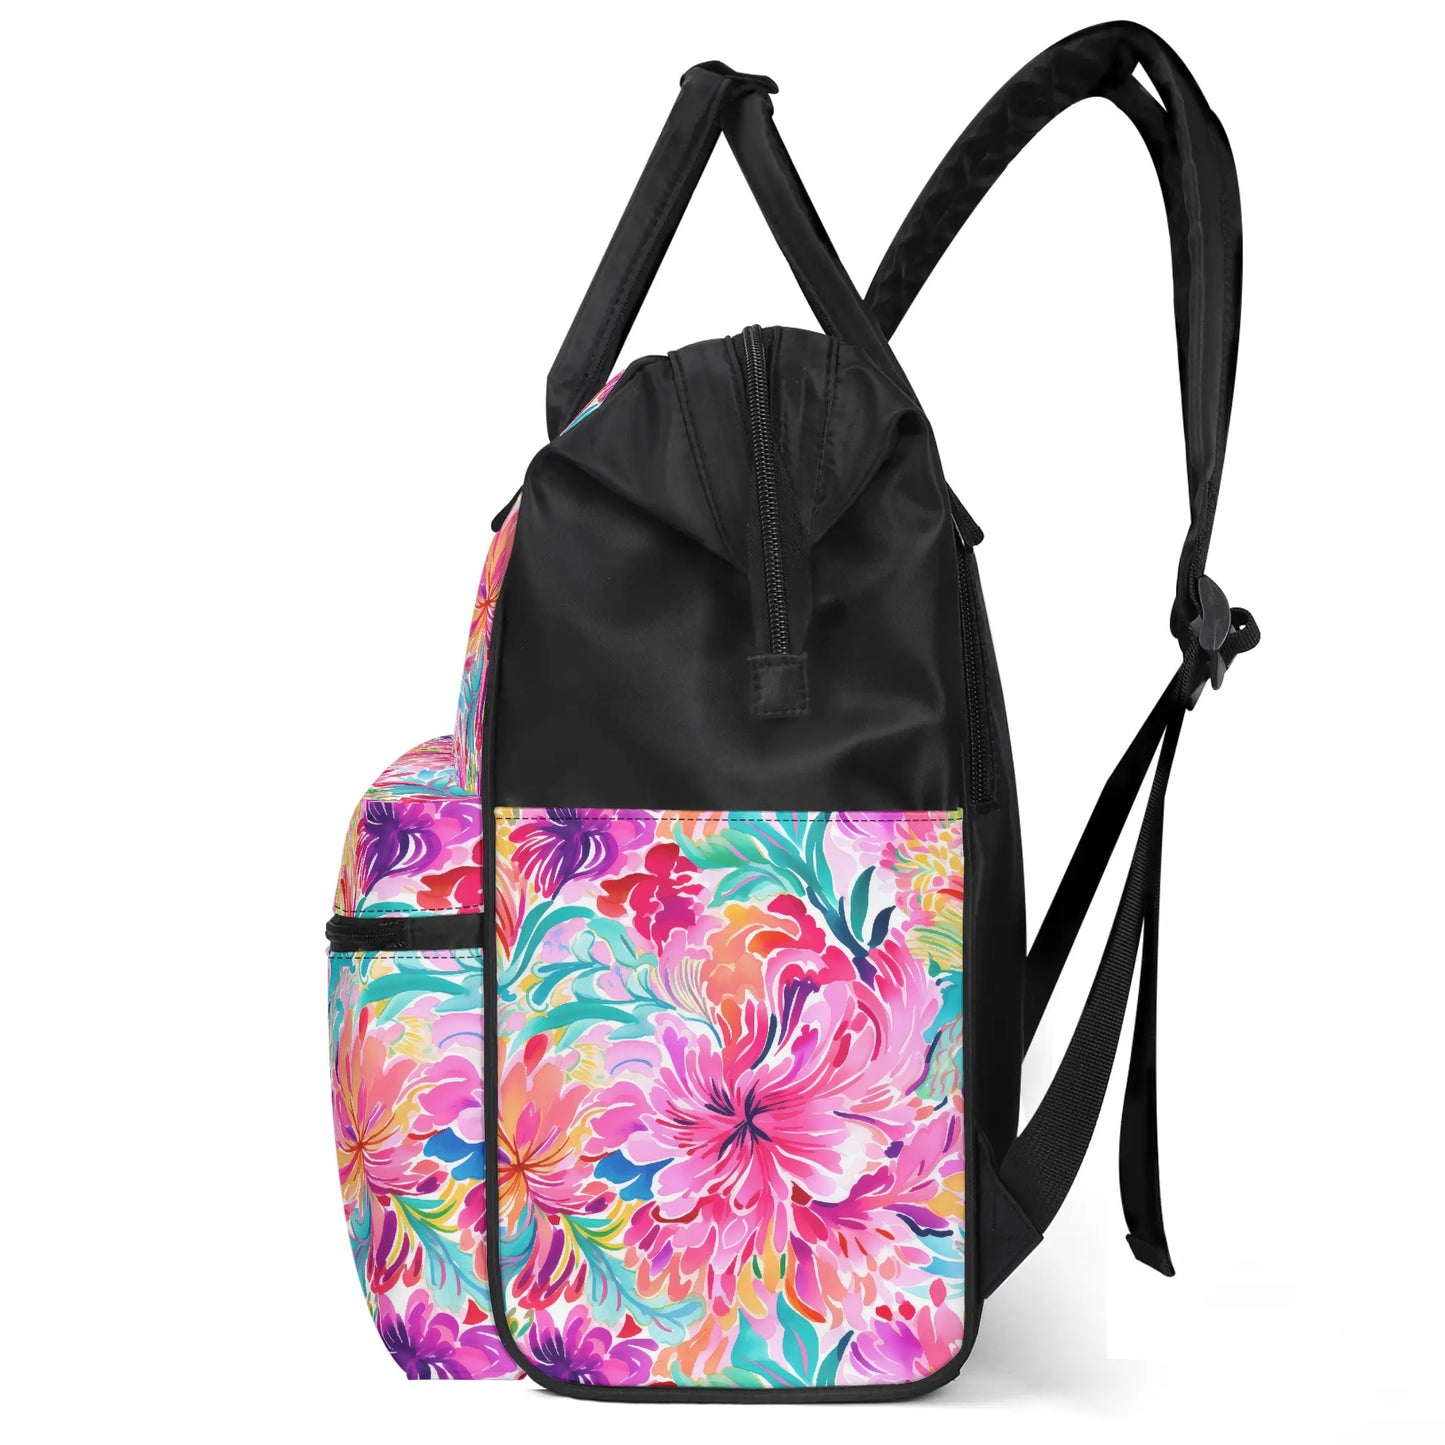 Rainbow Tropics: Watercolor Flowers in Vibrant Pink, Green and Orange Hues Large Capacity Backpack Diaper Nursing Bag